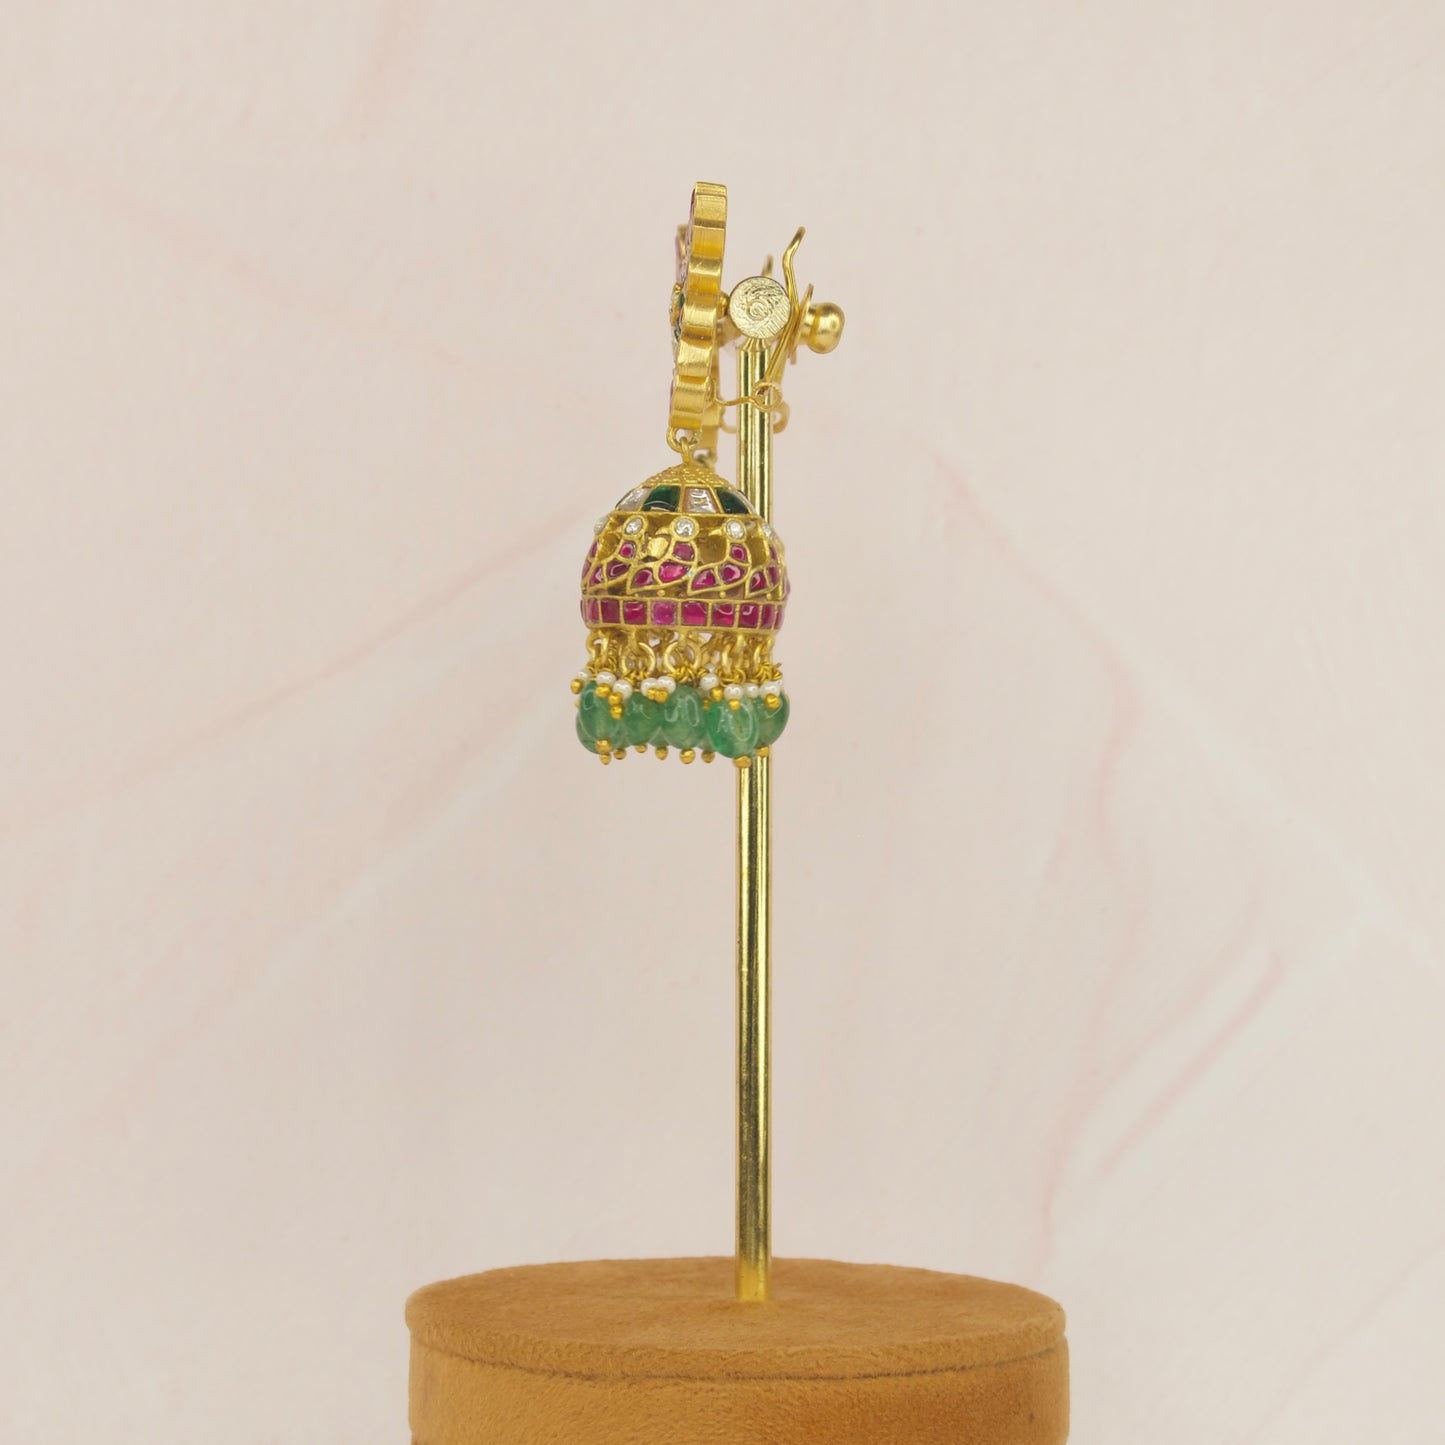 Gold Plated Jhumka Earrings with Jadau Kundan stones & Beads with 22k gold plating. This Product belongs to Jadau Kundan jewellery Category